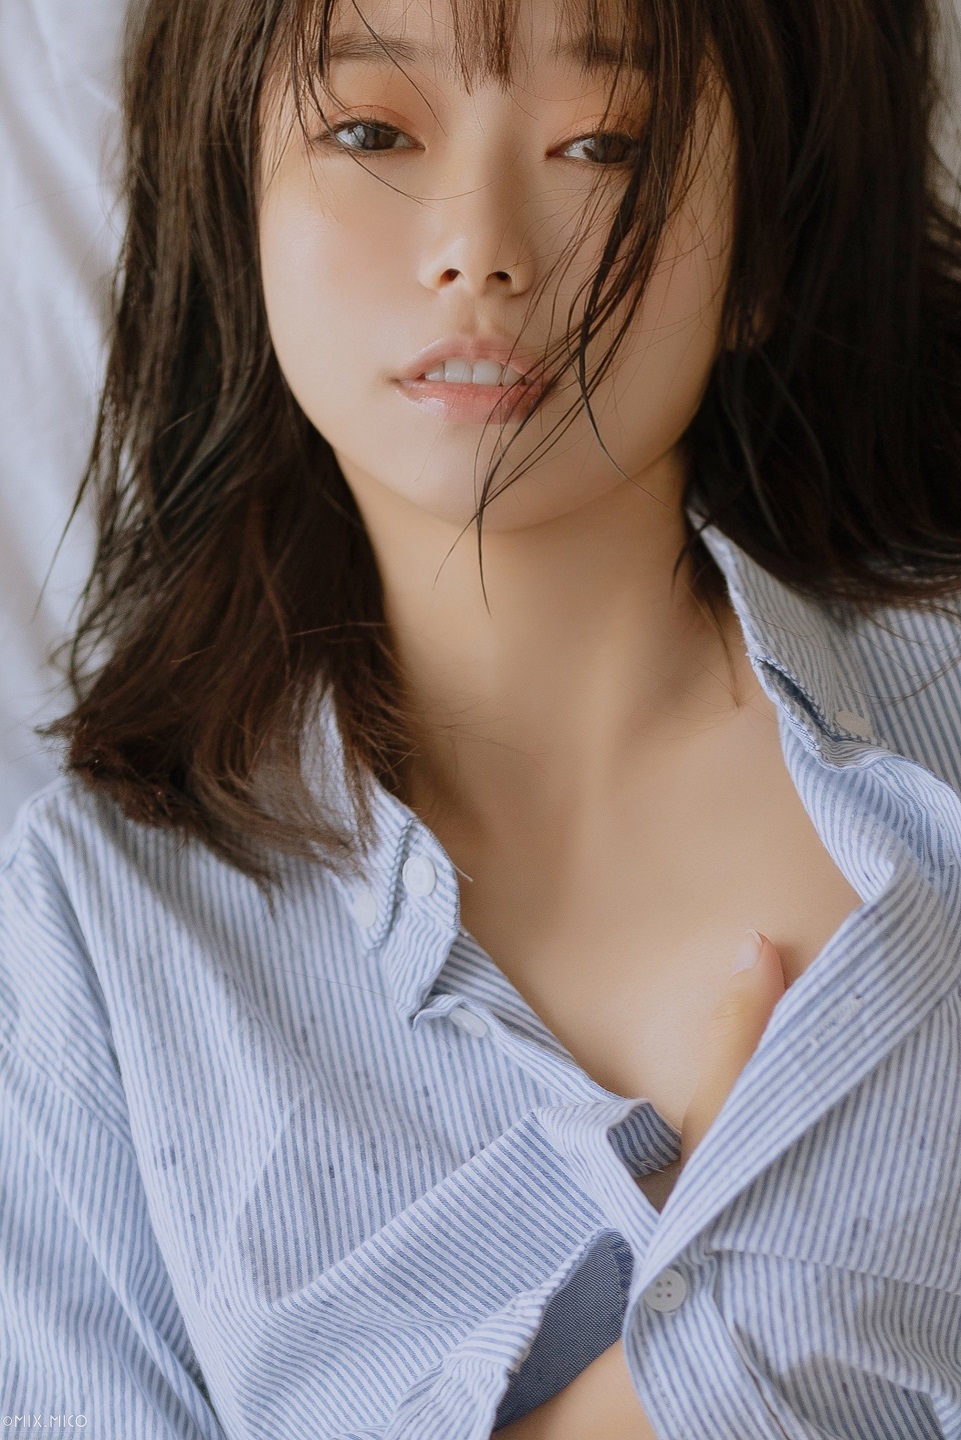 People 961x1440 AixiLove women Asian brunette hair in face portrait shirt sensual gaze